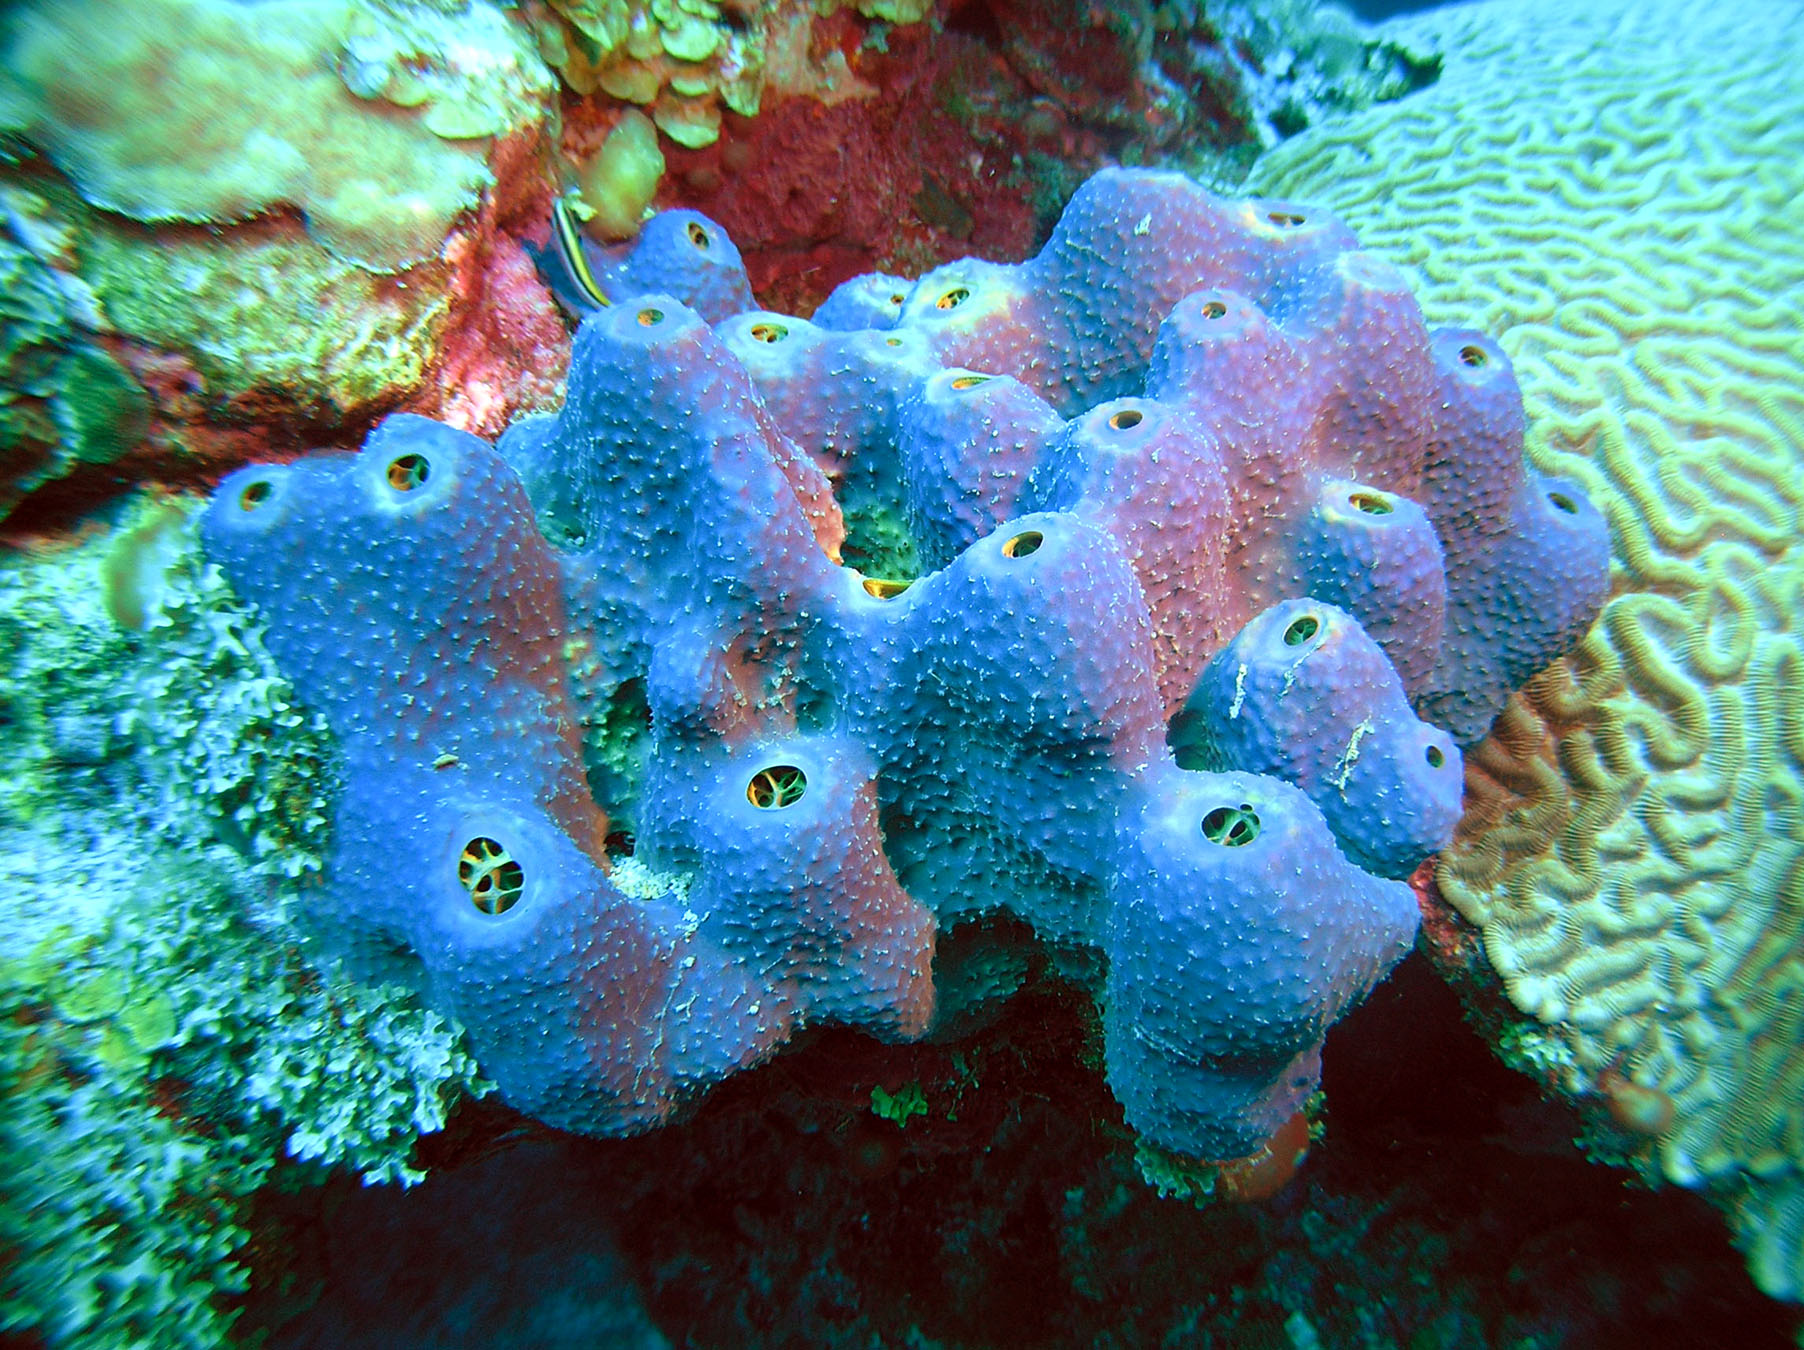 Are sponges toxic?